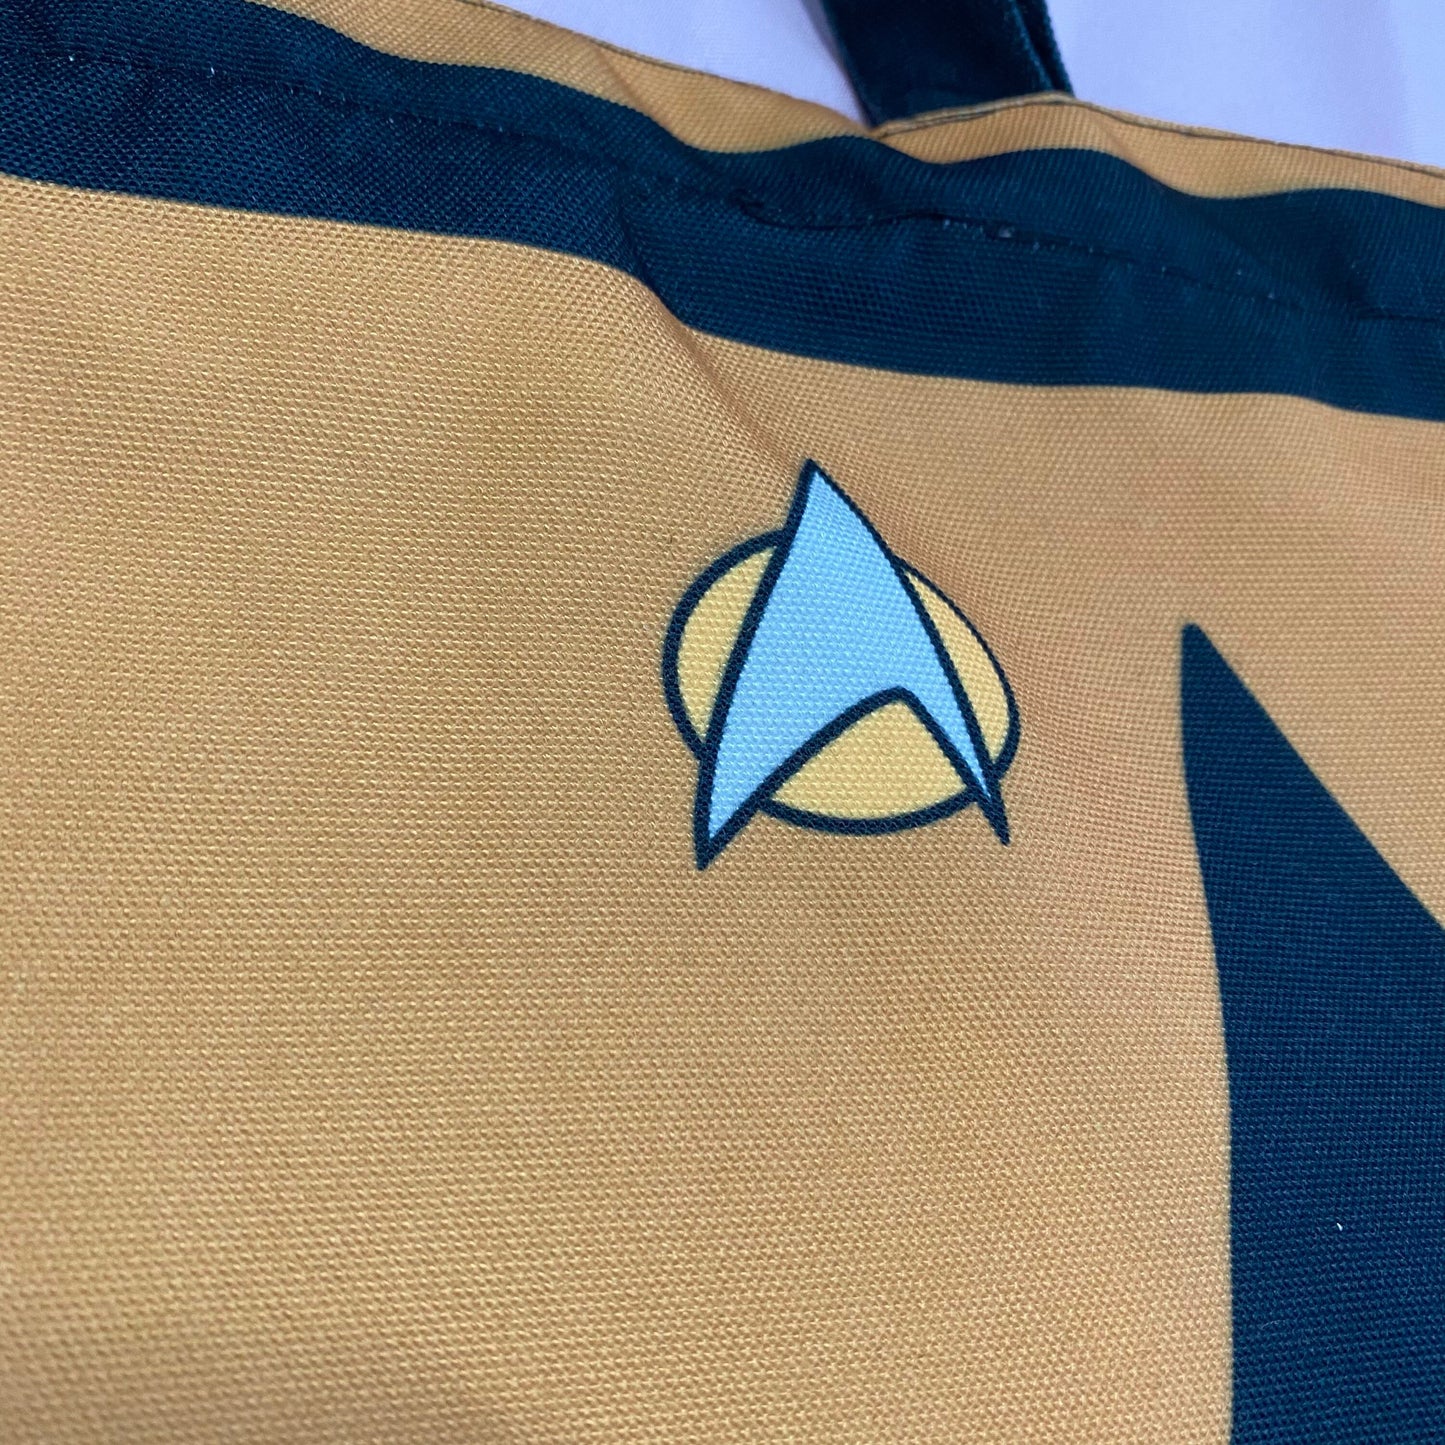 Star Trek TNG Security/OPS Uniform Data Inspired Tote Bag